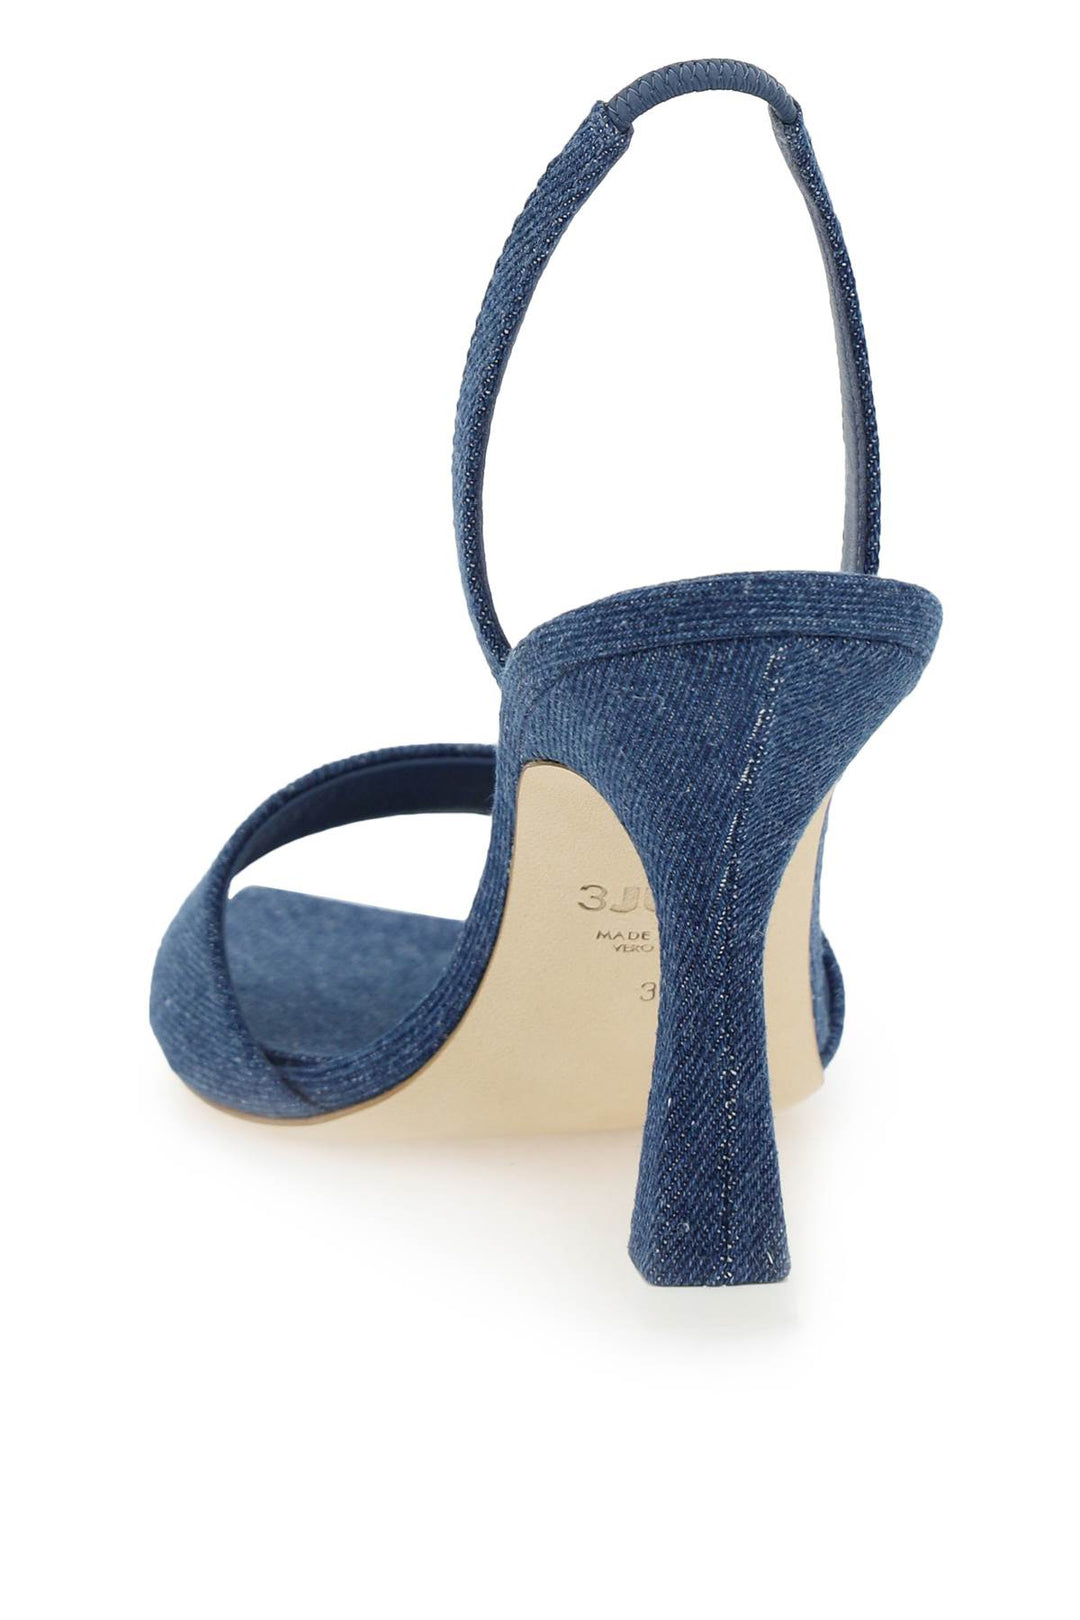 3 Juin 'Lily' Sandals   Blu